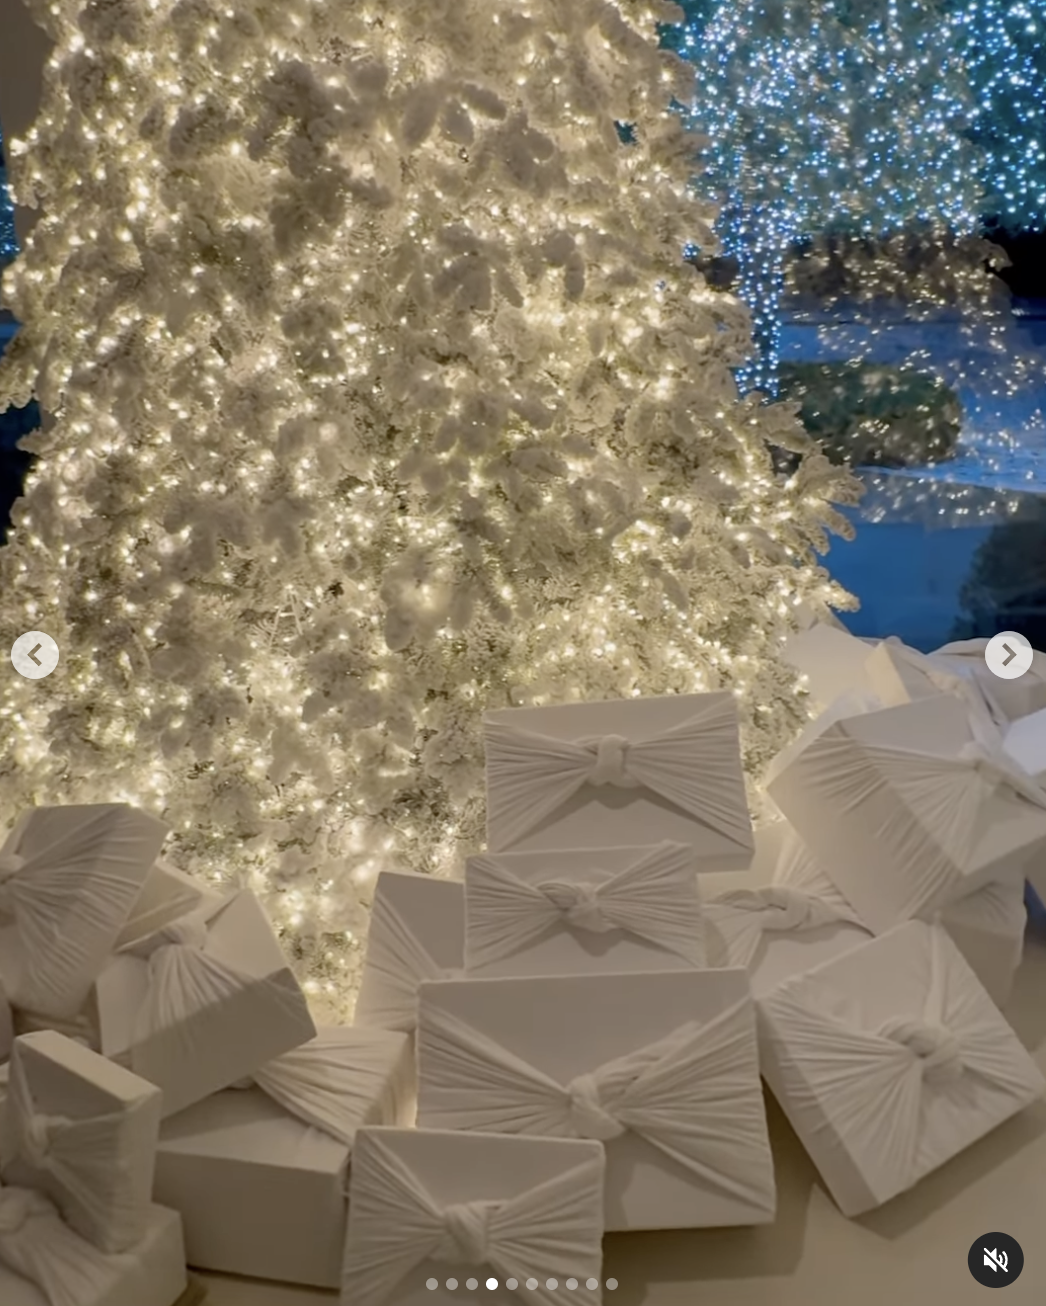 Matte Chocolate Brown Christmas Wrapping Paper Roll Kylie Jenner Kardashian  Minimalist 